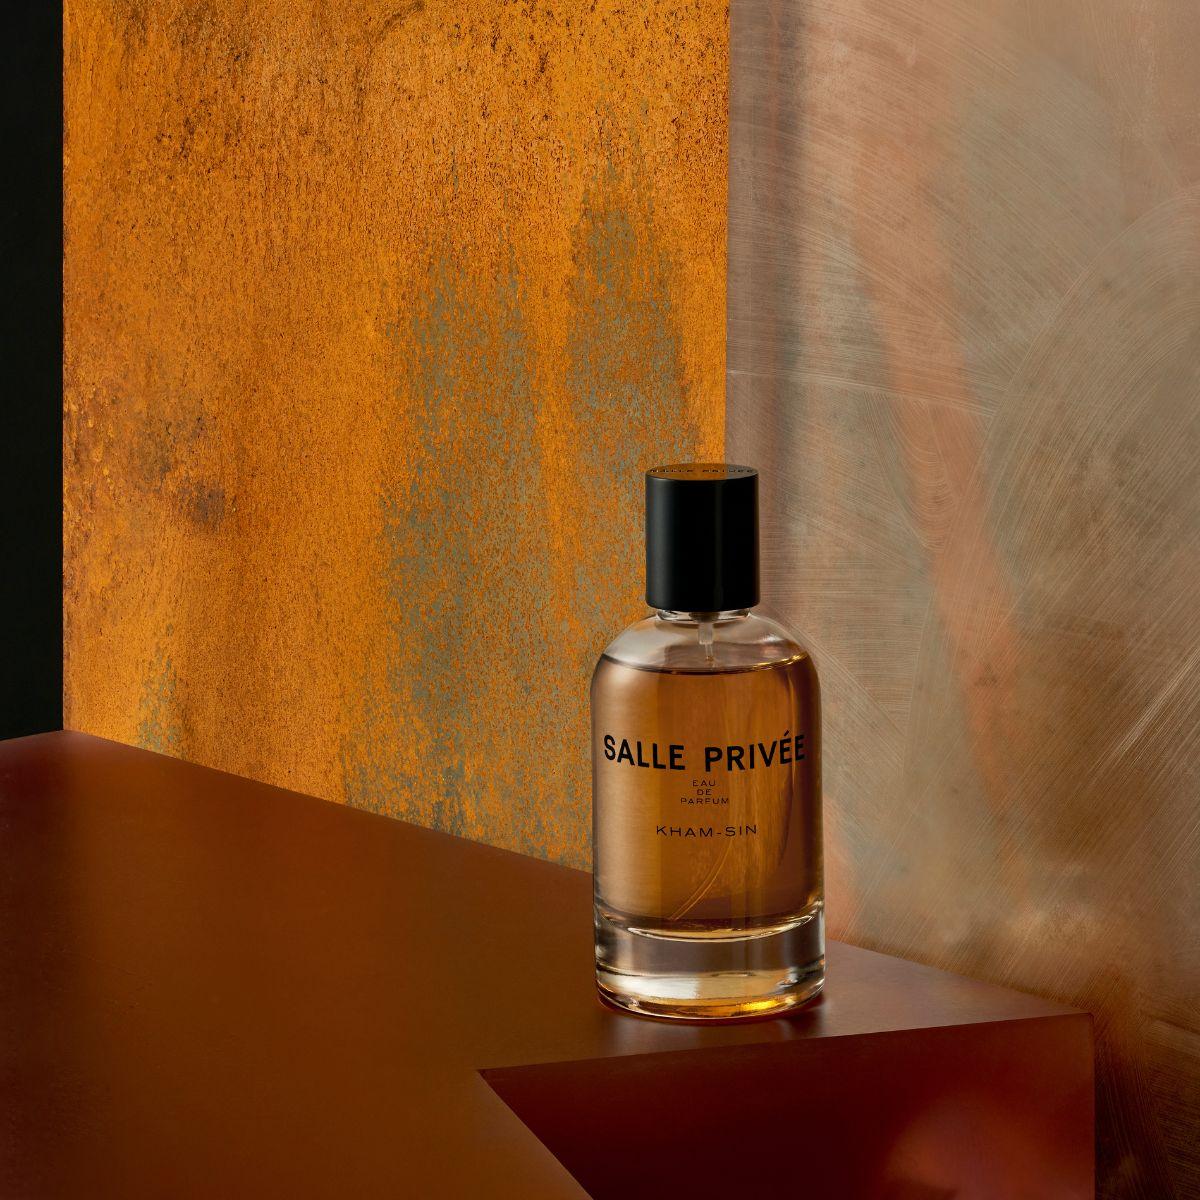 Image of Kham-Sin eau de parfum 100 ml by the perfume brand Salle Privee